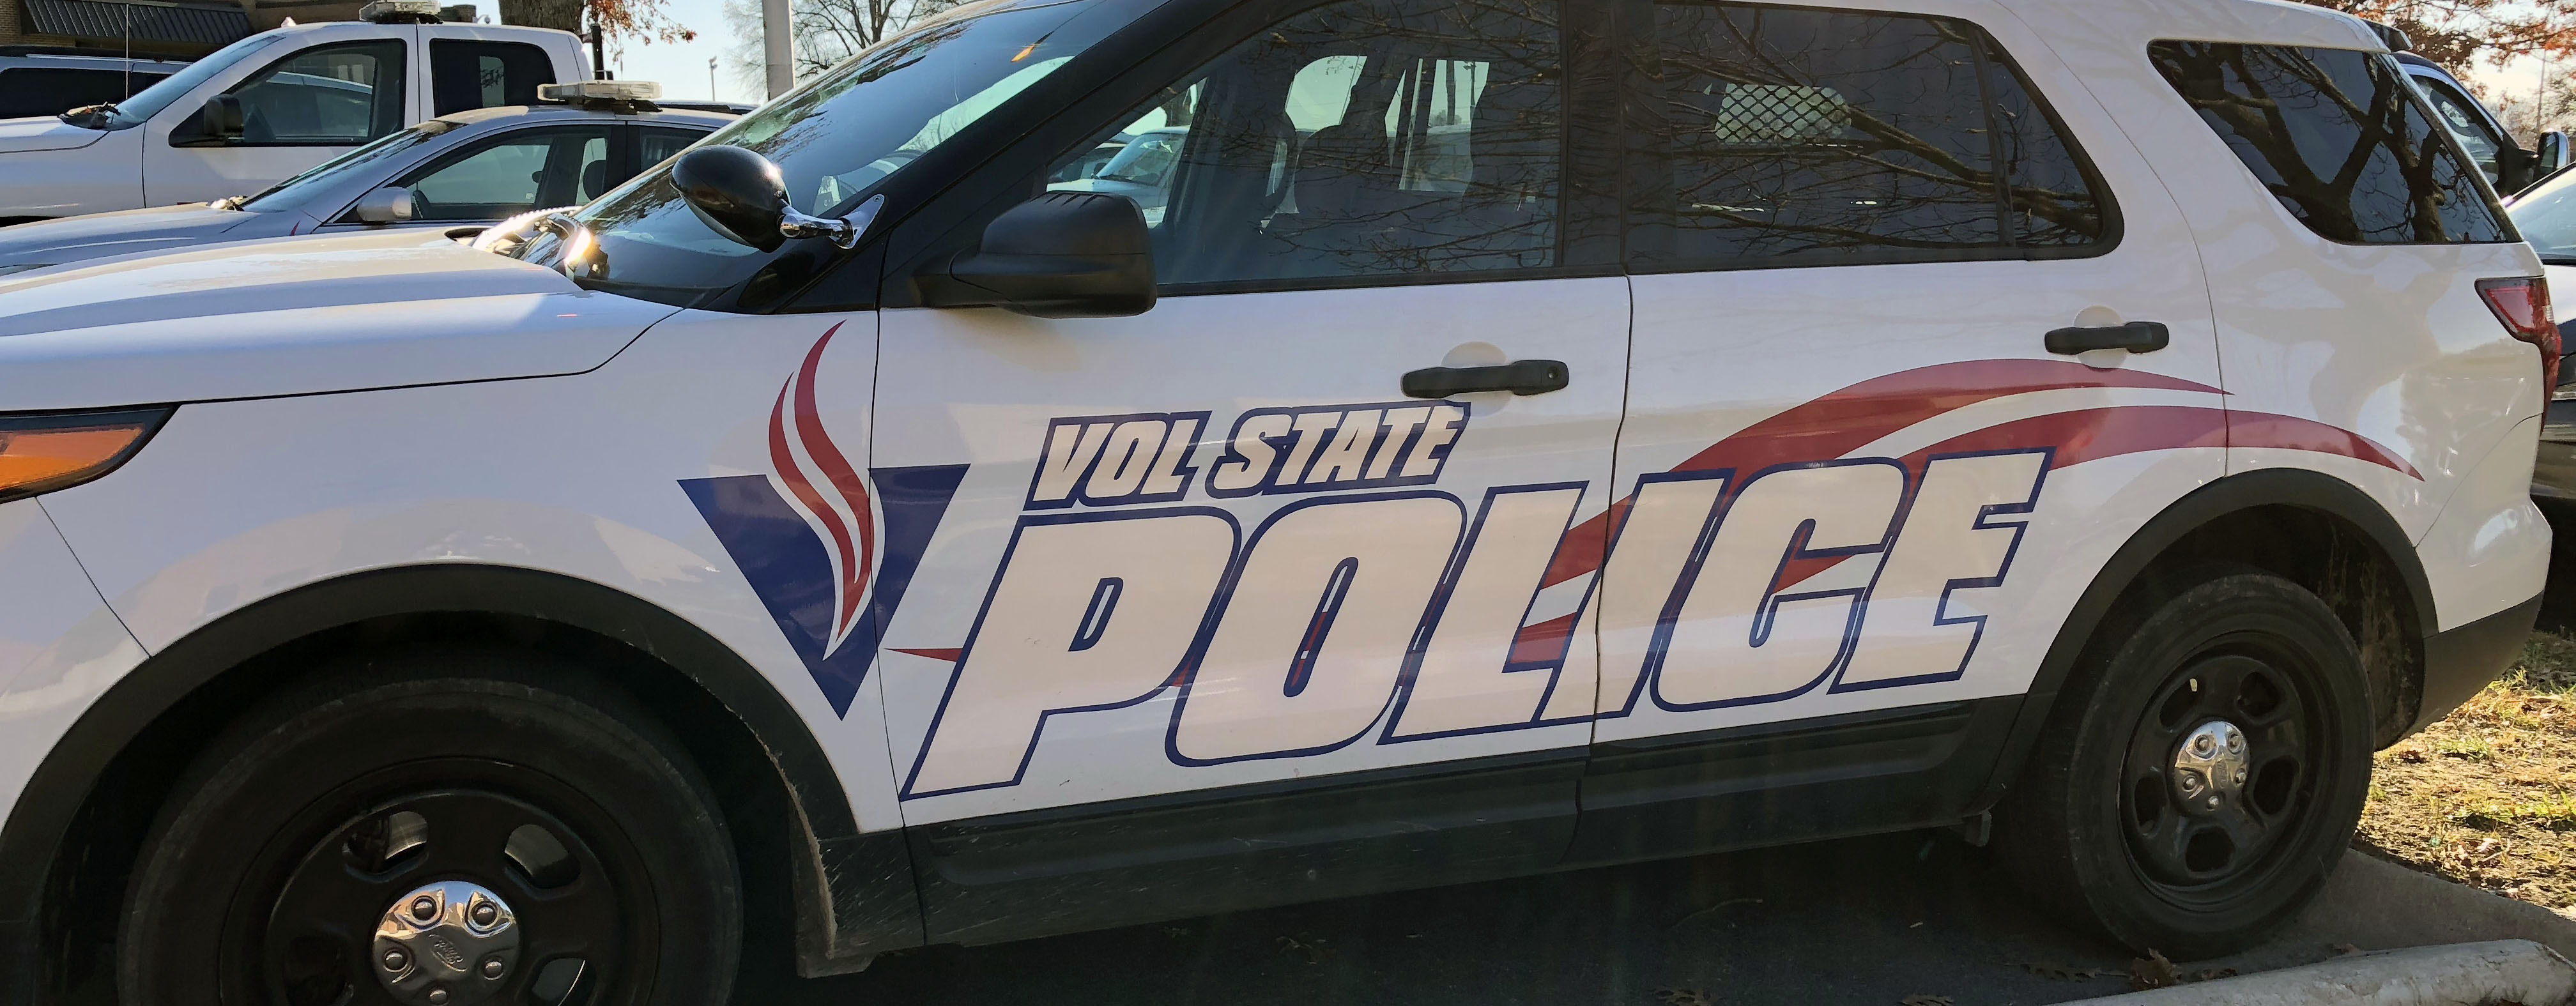 Vol State campus polic car